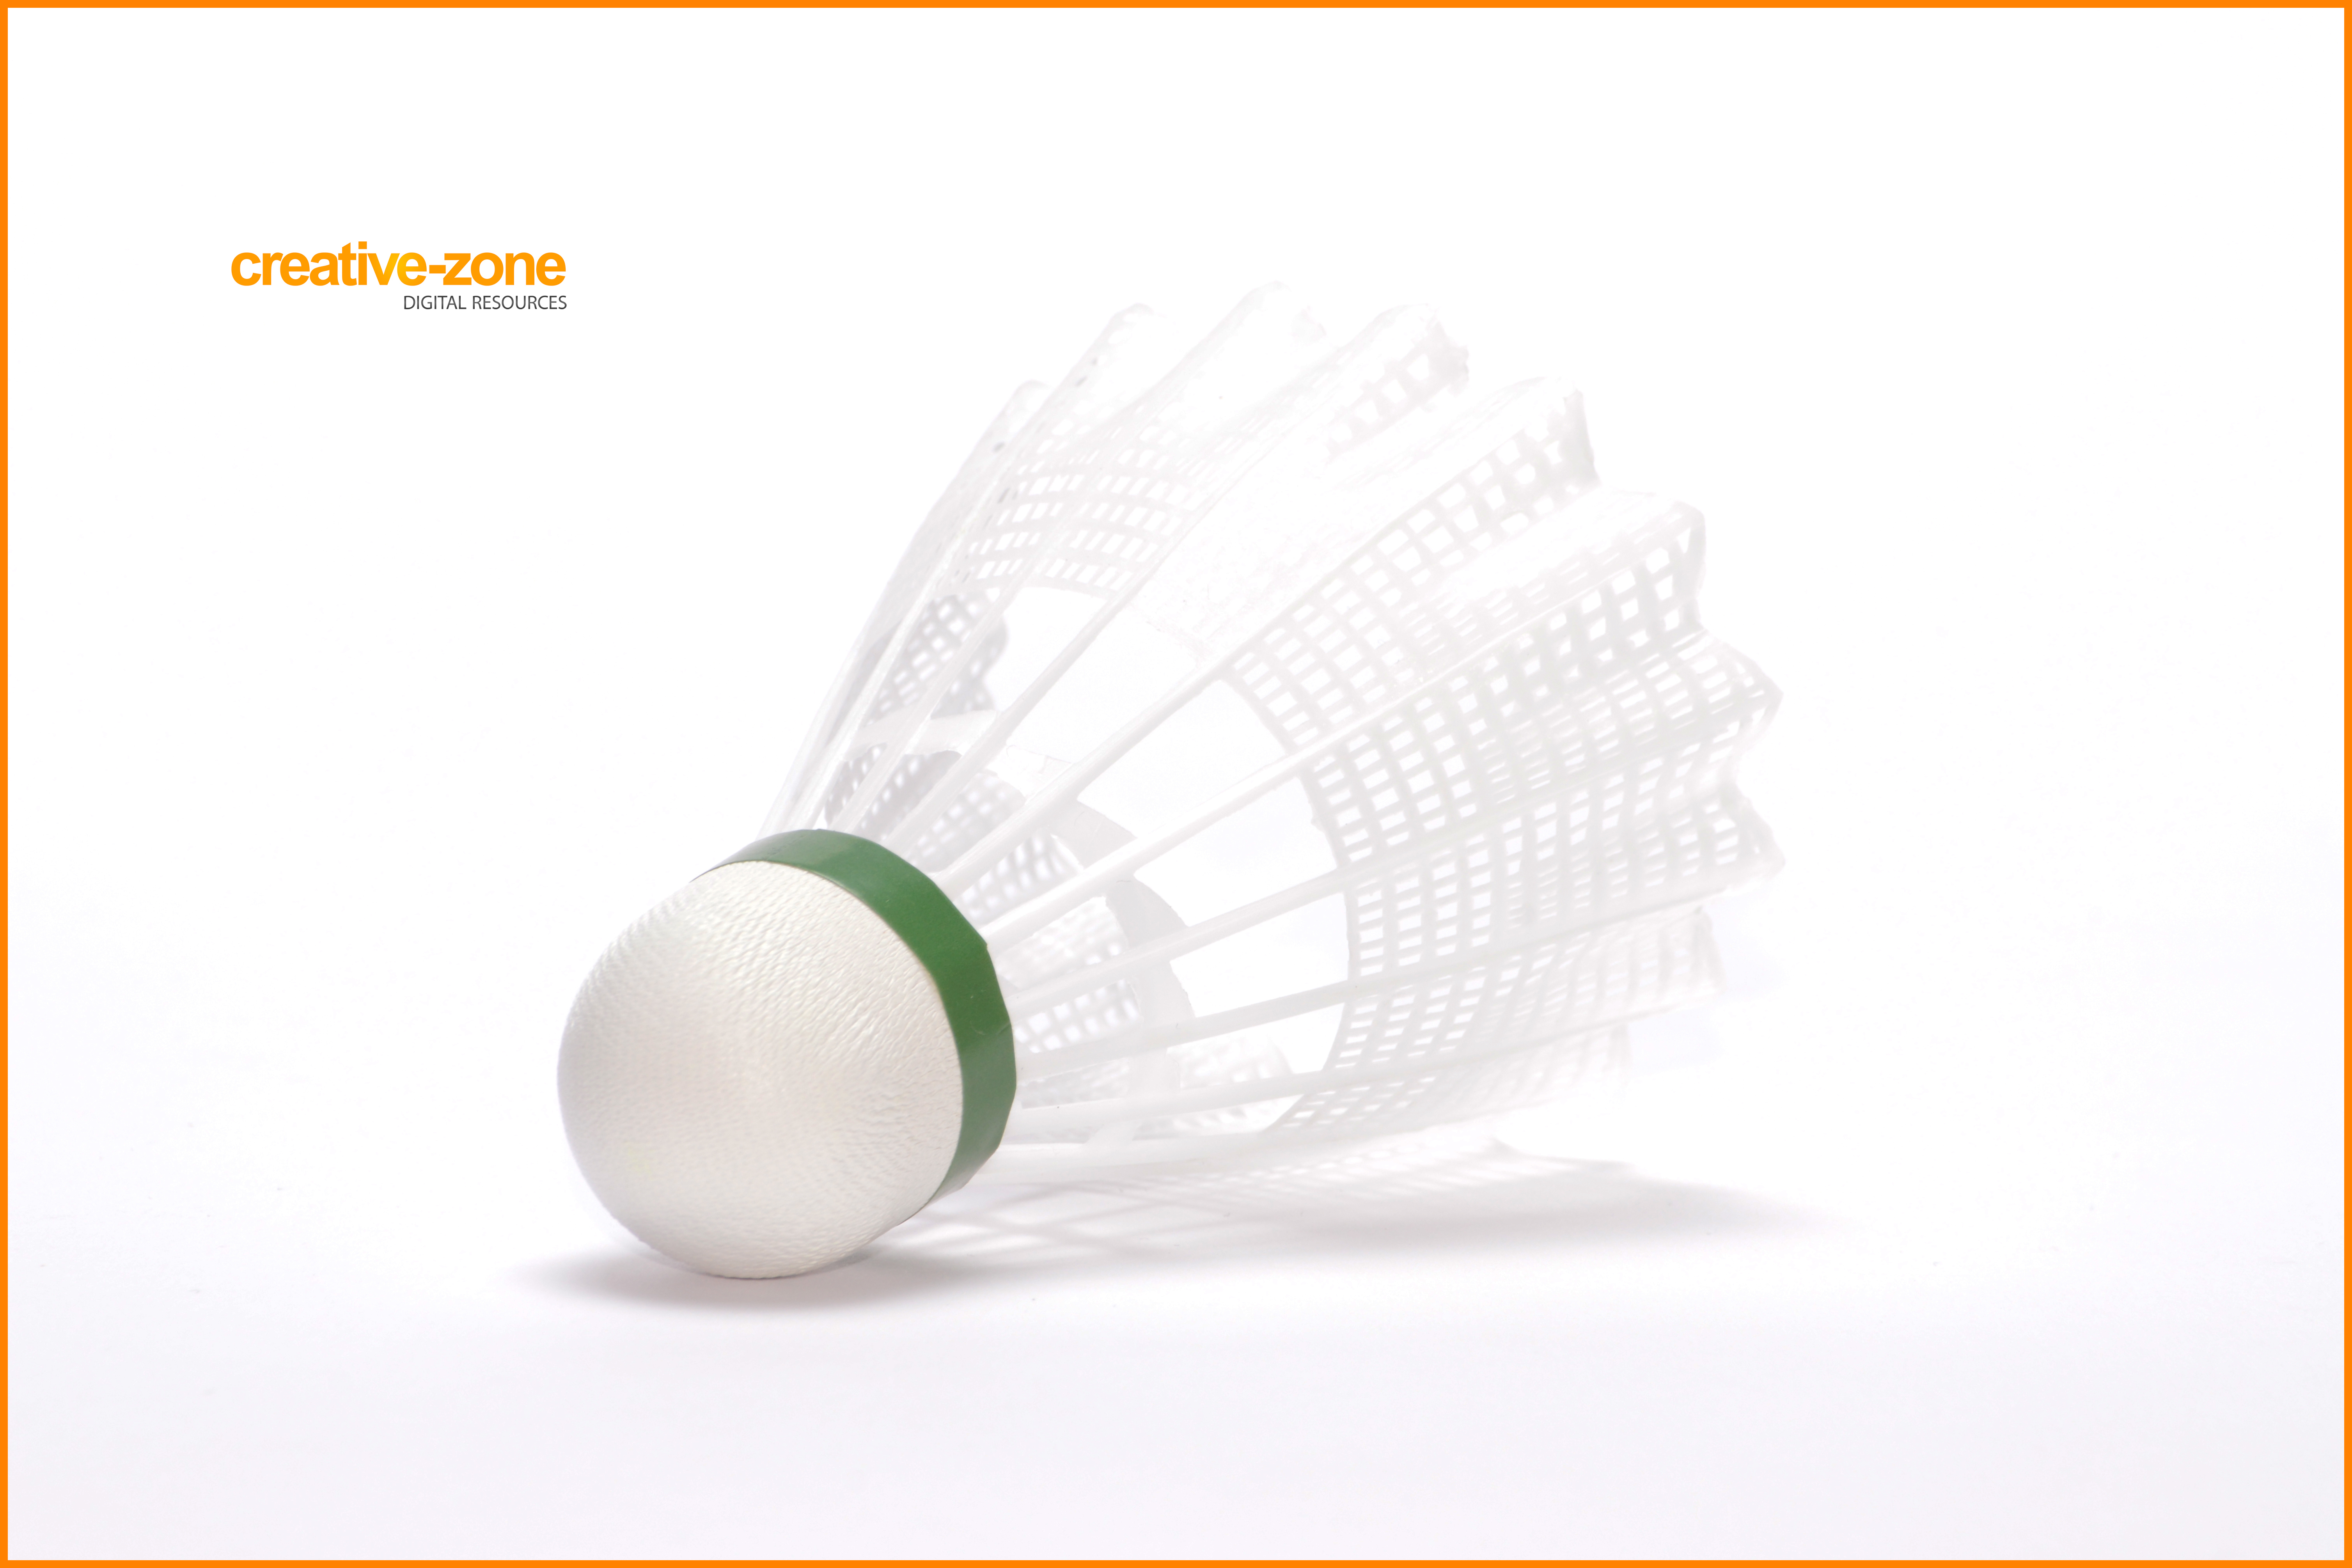 Badmintonschlager Mit Ball PN